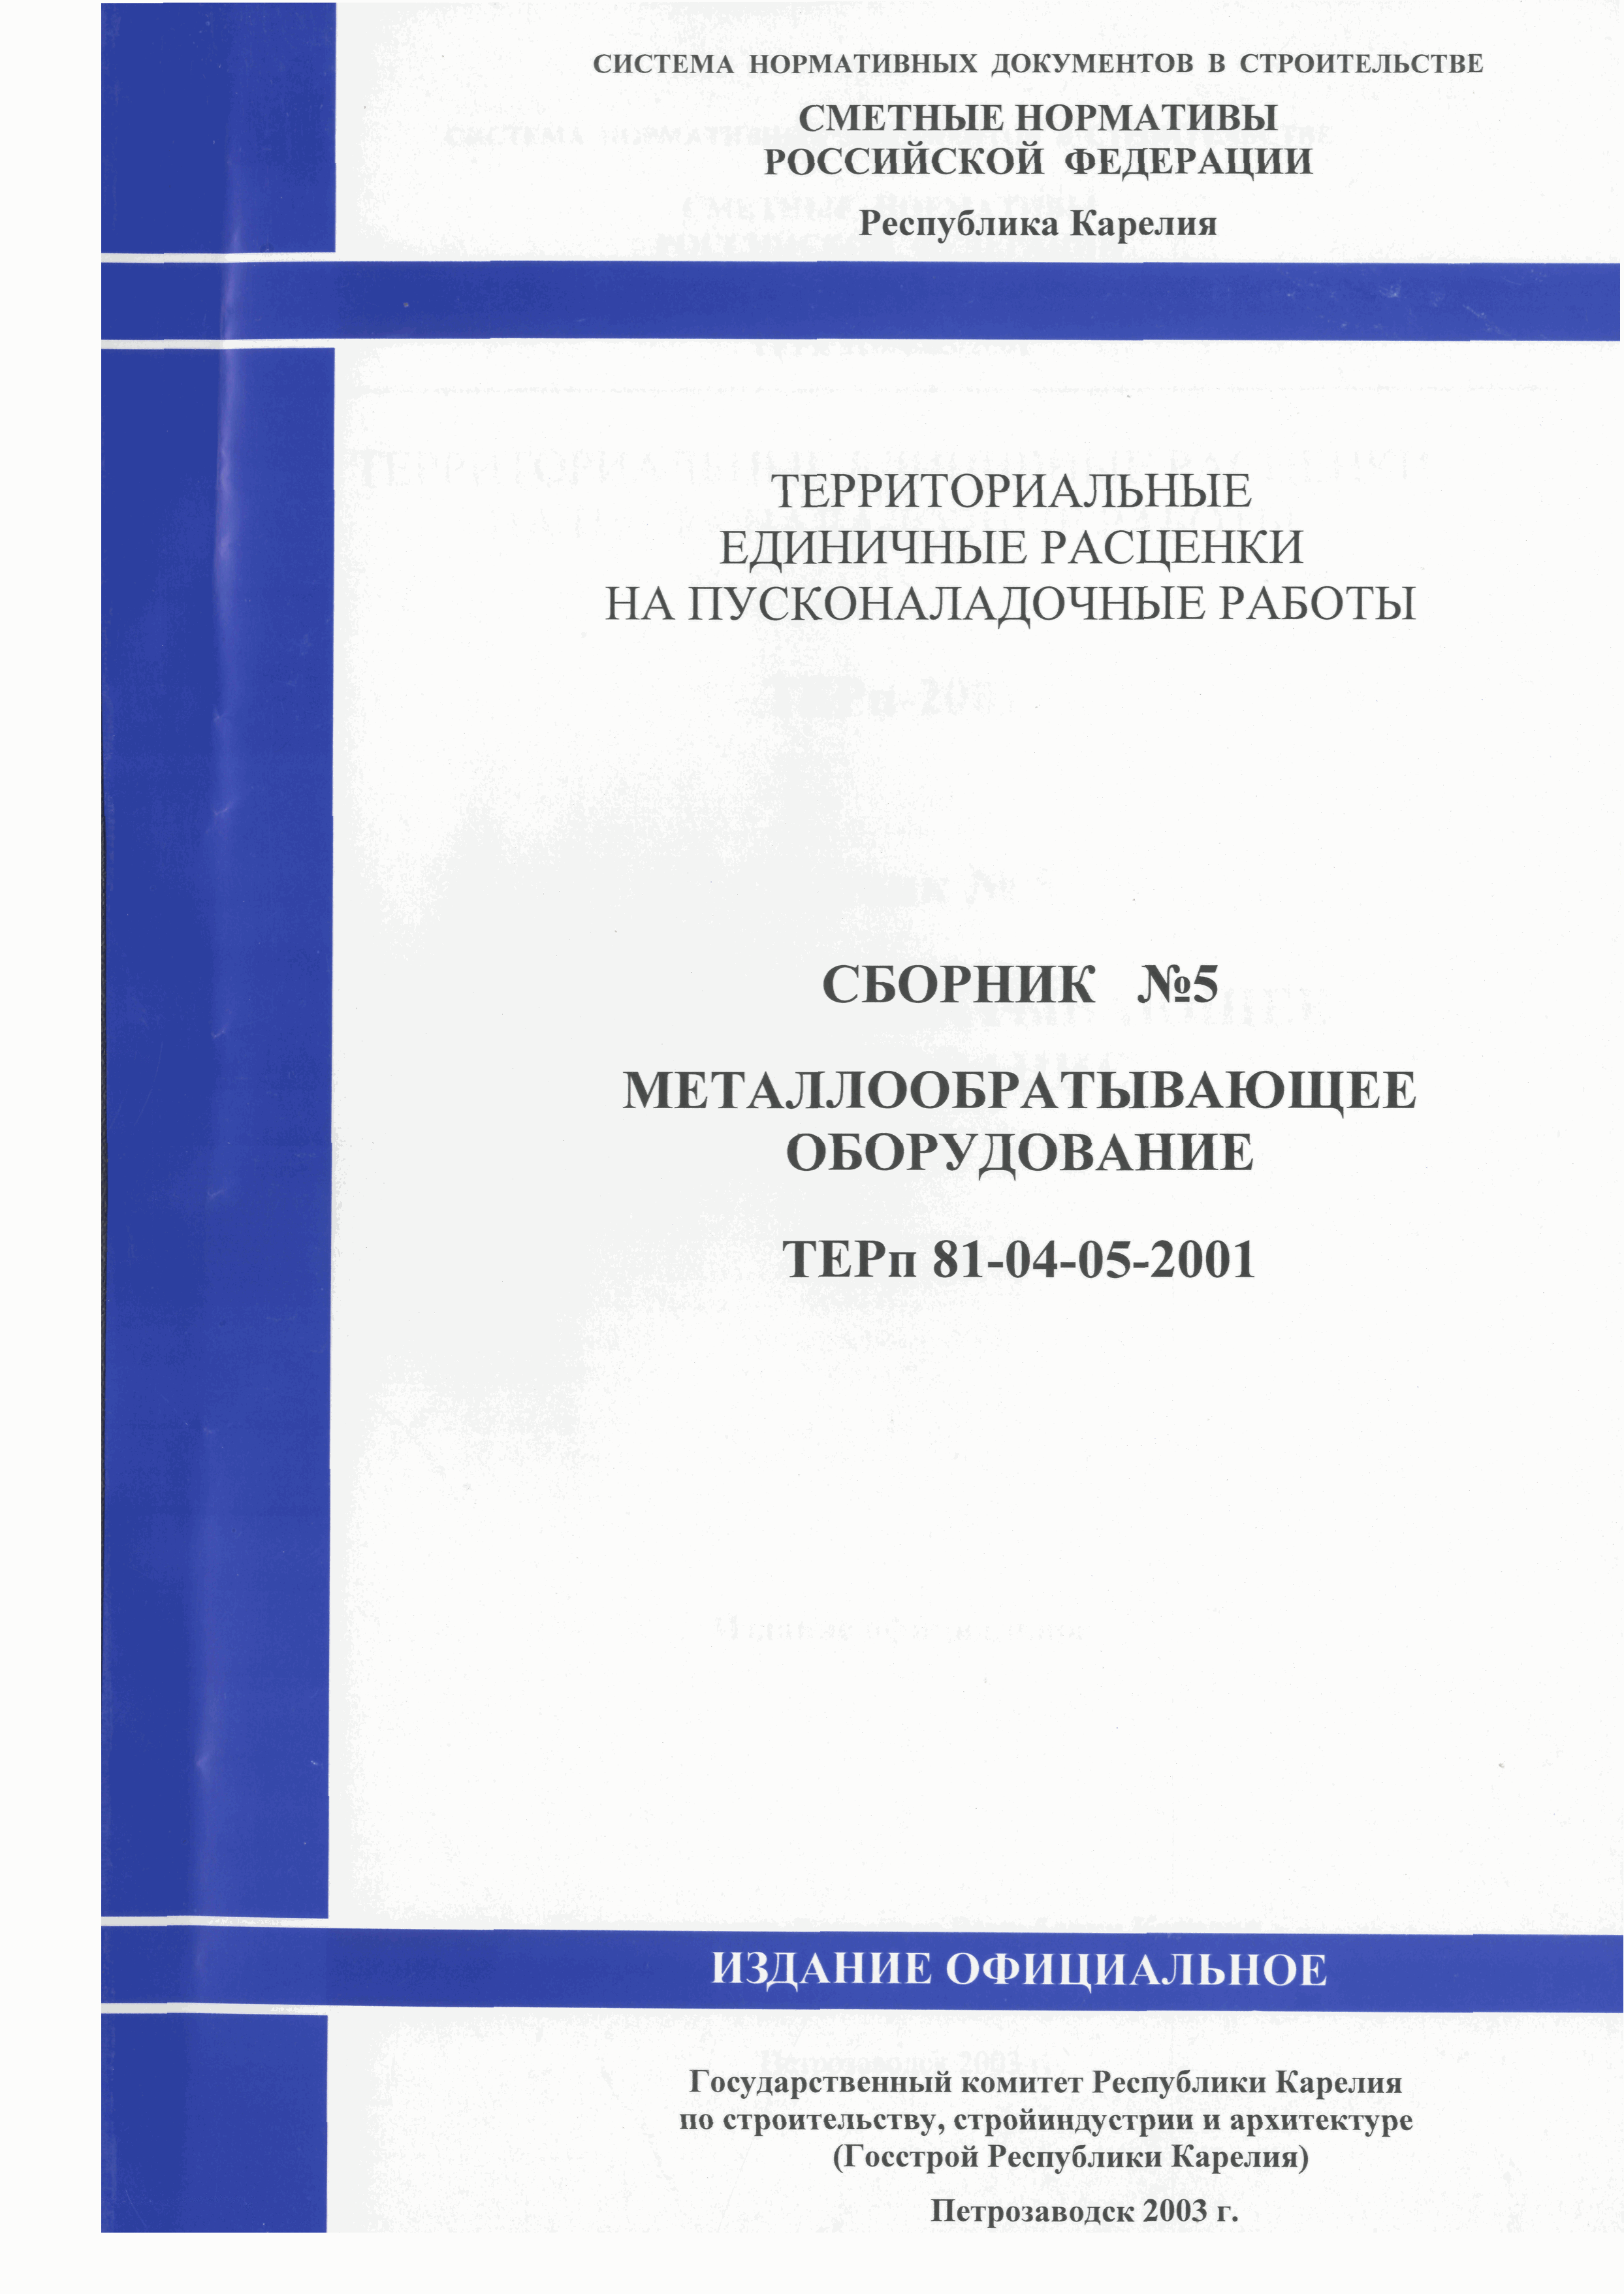 ТЕРп Республика Карелия 2001-05